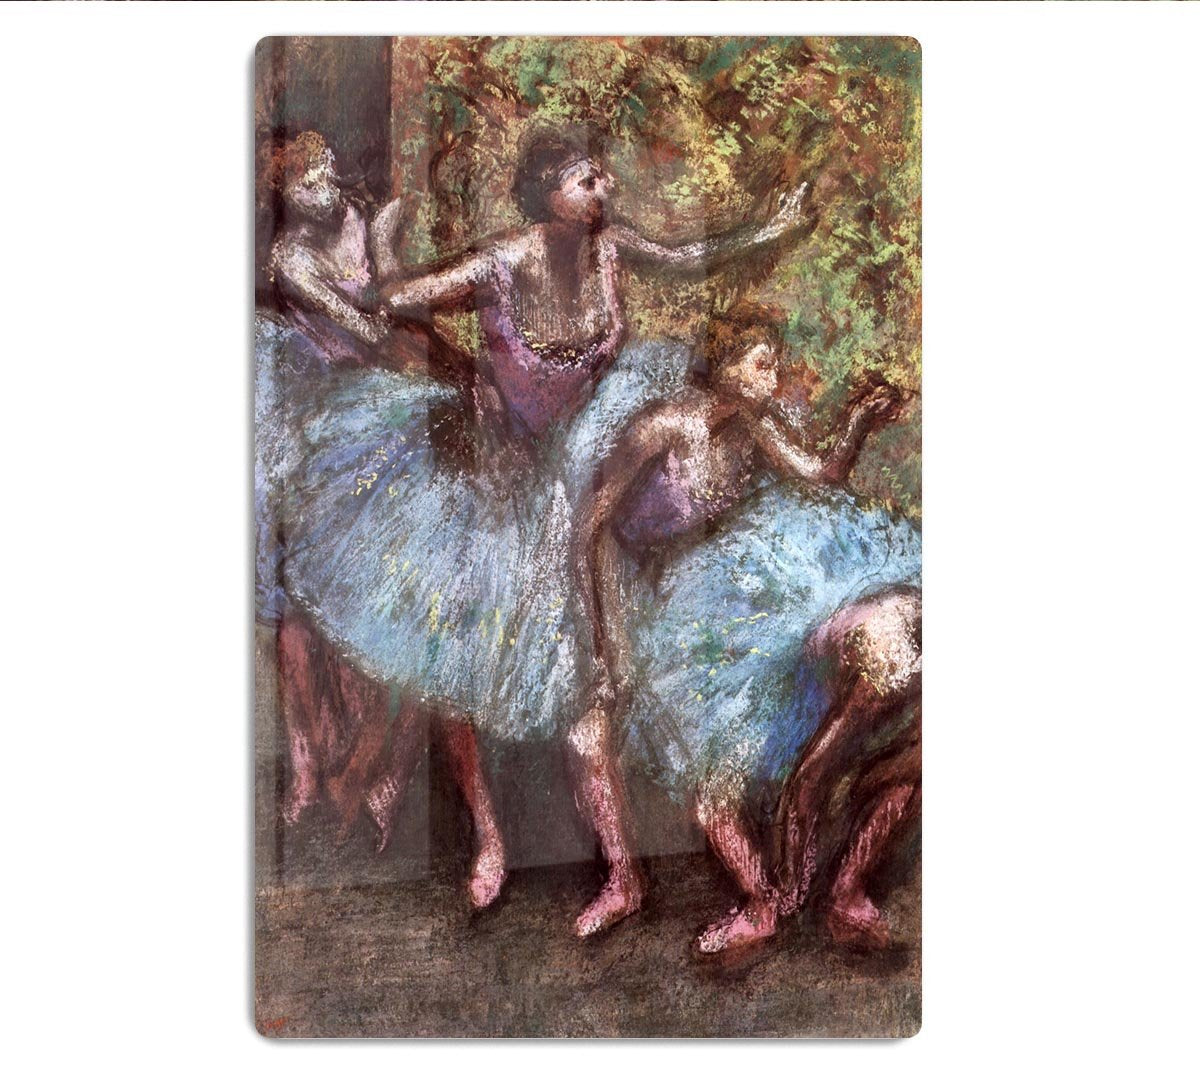 Four dancers behind the scenes 1 by Degas HD Metal Print - Canvas Art Rocks - 1